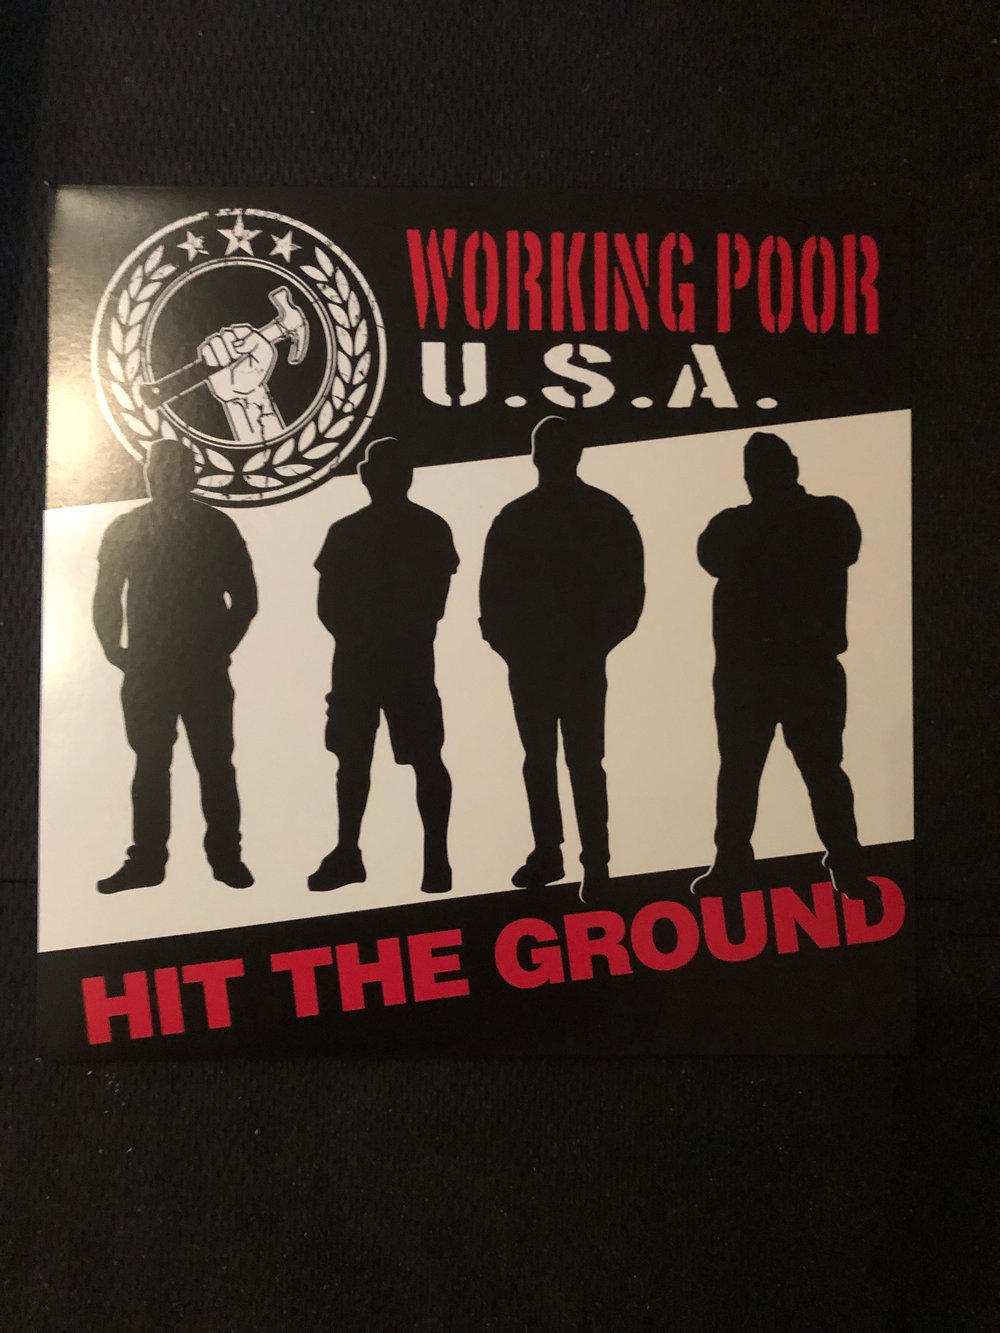 Working Poor U.S.A. - Hit the Group LP (LAST COPY!!)